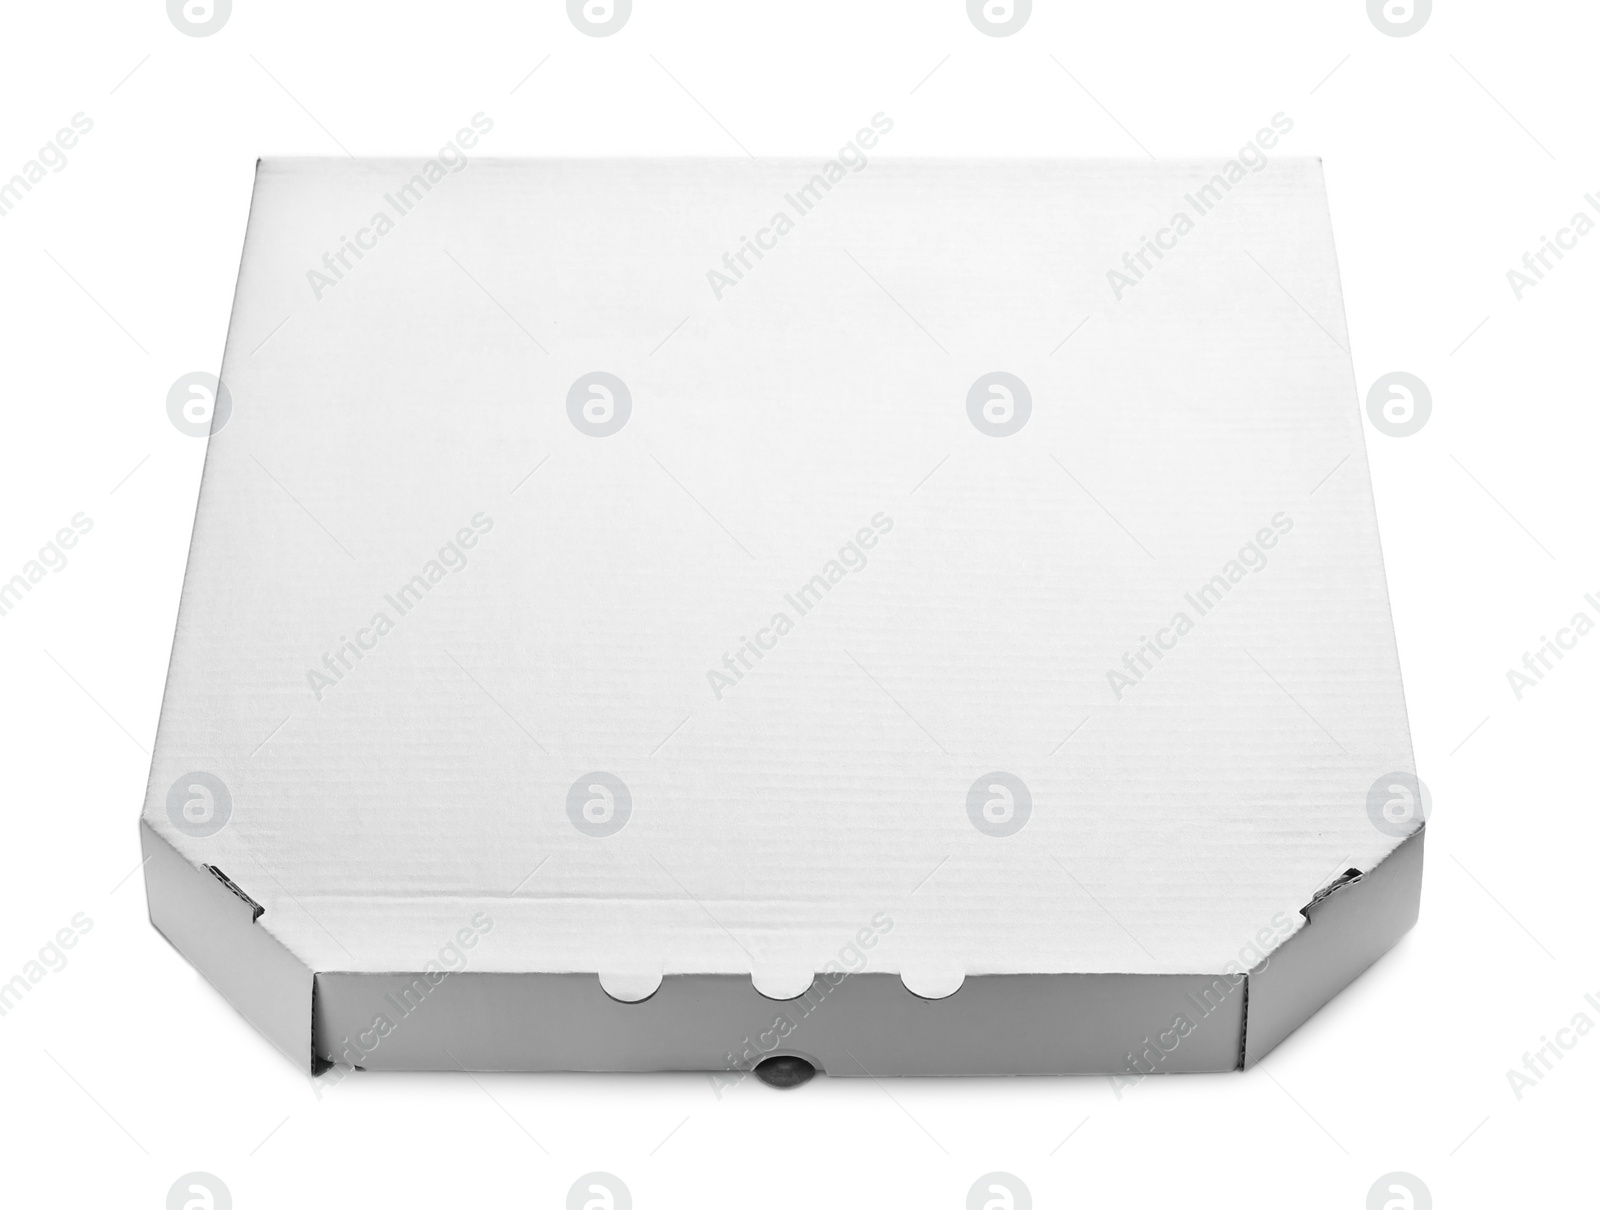 Photo of Mockup of cardboard pizza box on white background